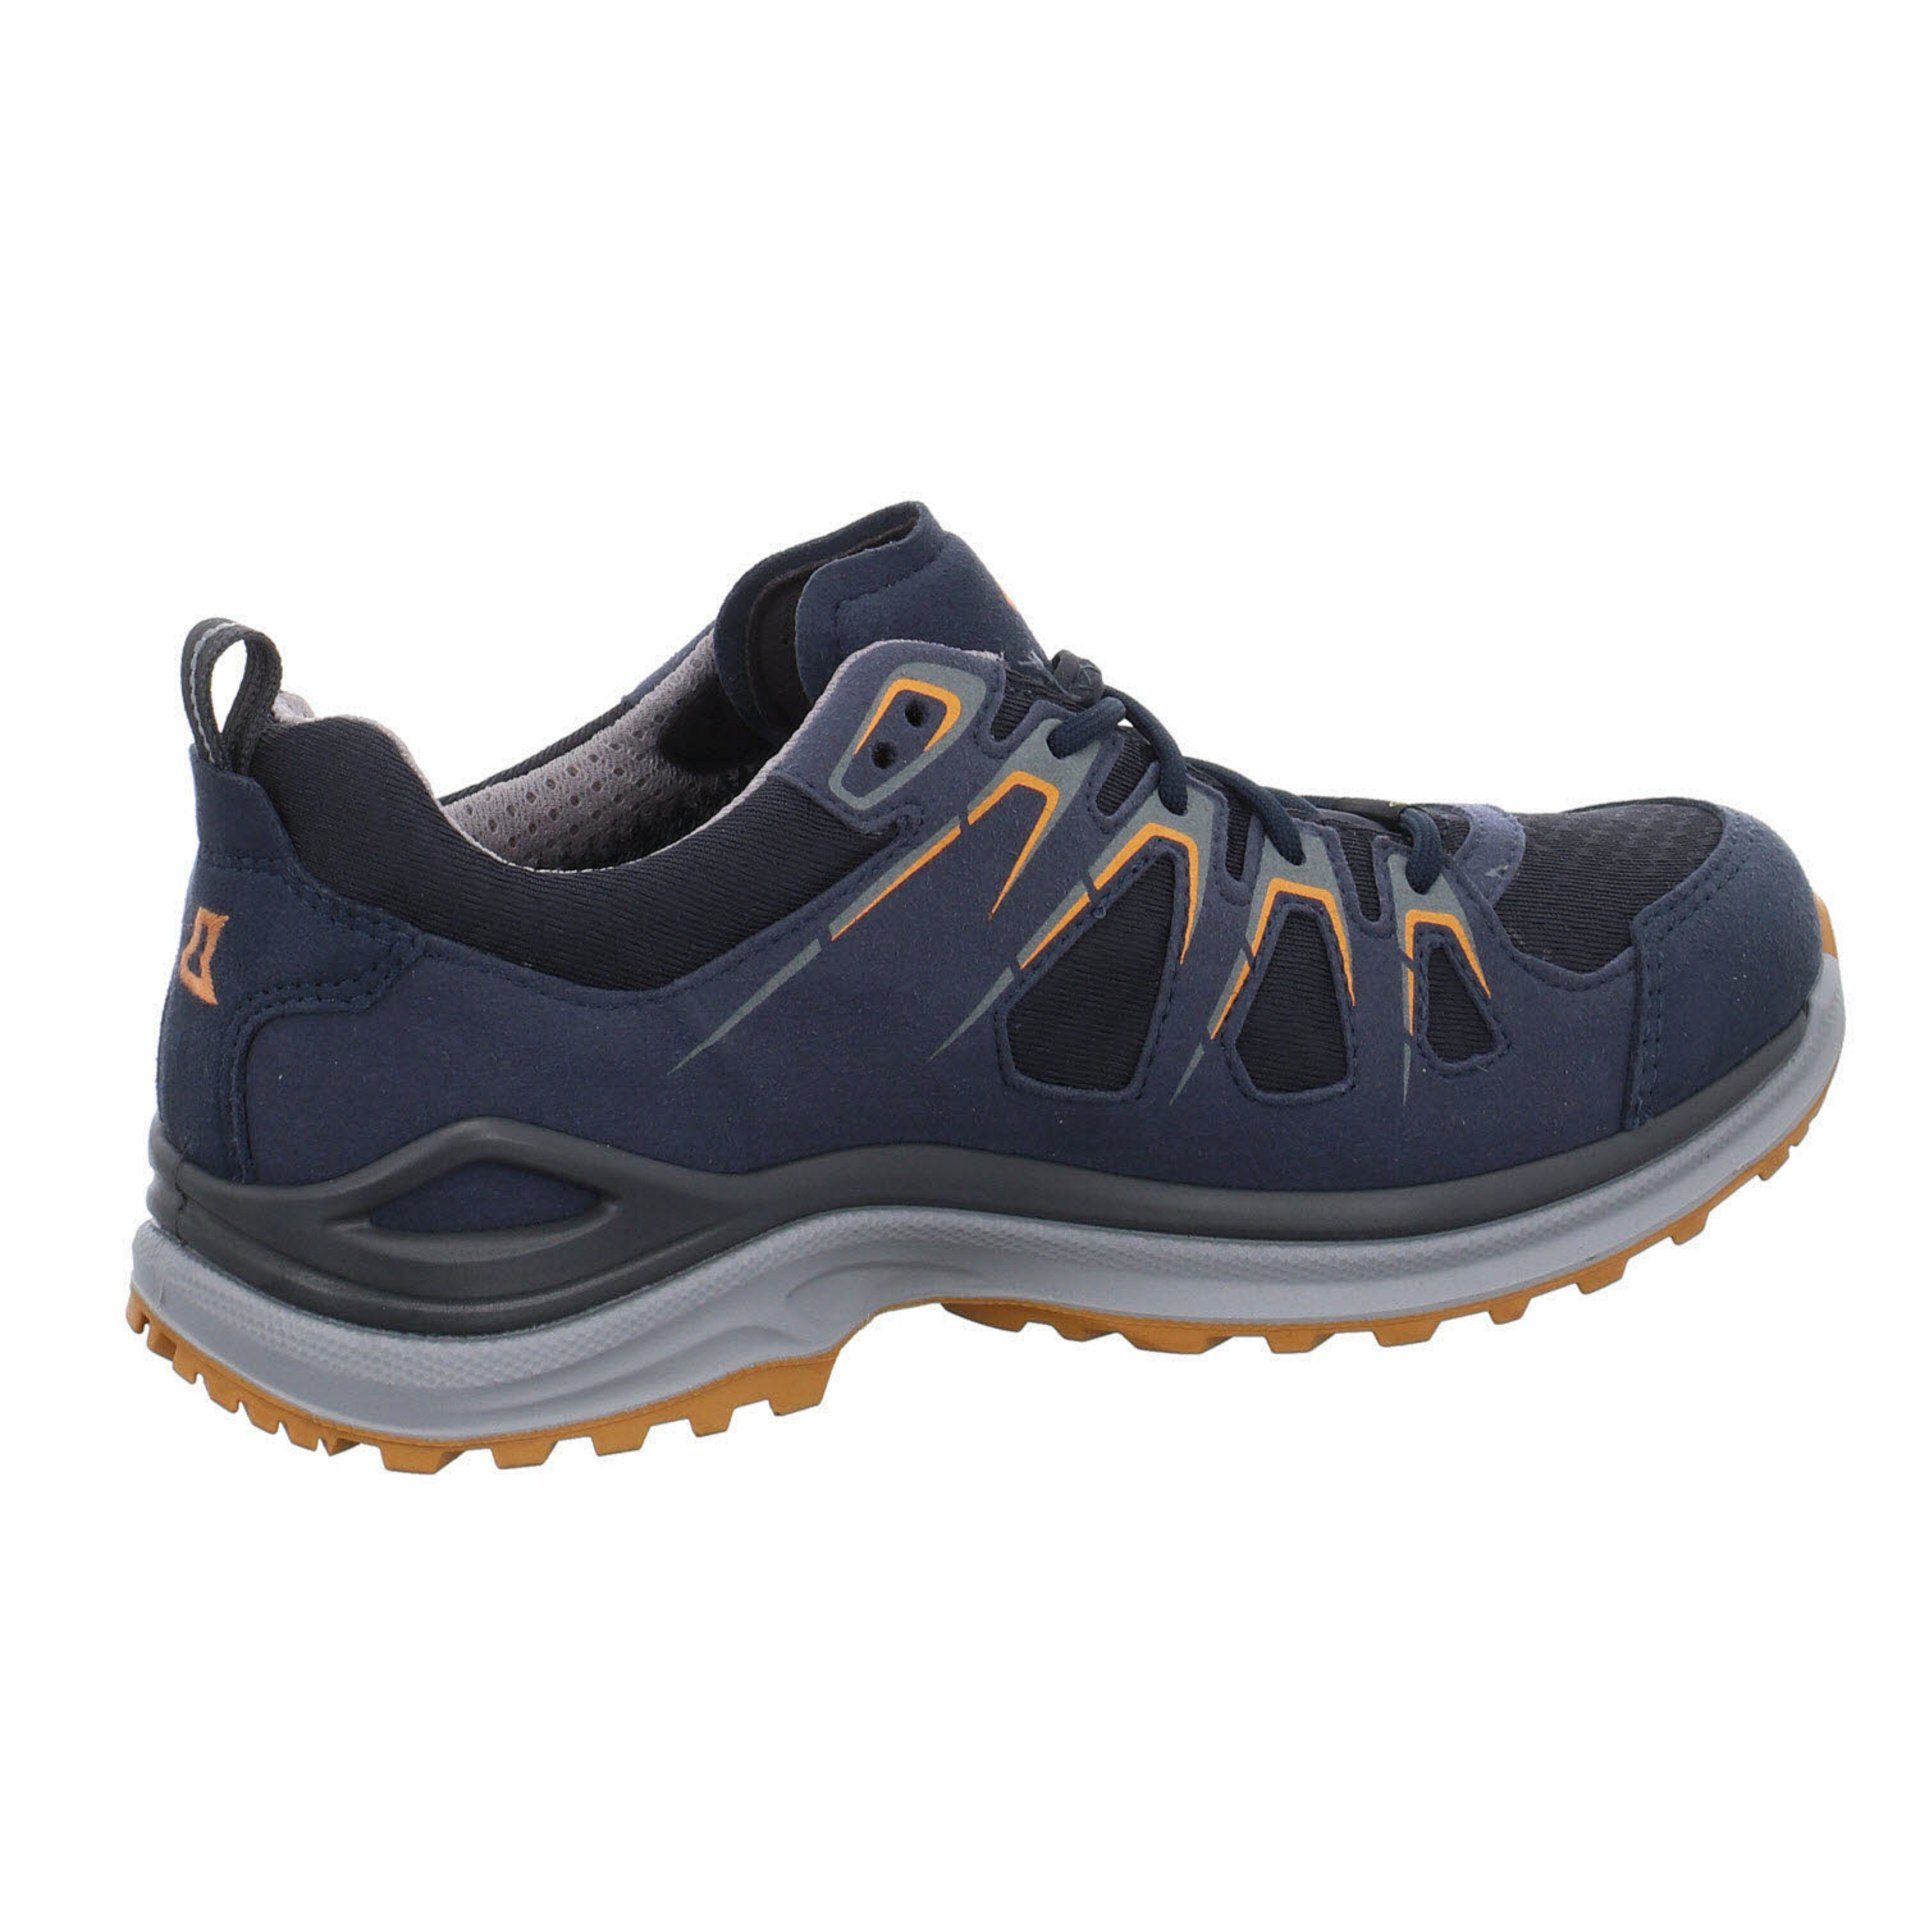 Schuhe Lowa Lo Damen Innox Outdoor Outdoorschuh stahlblau/marine Synthetikkombination Outdoorschuh EVO